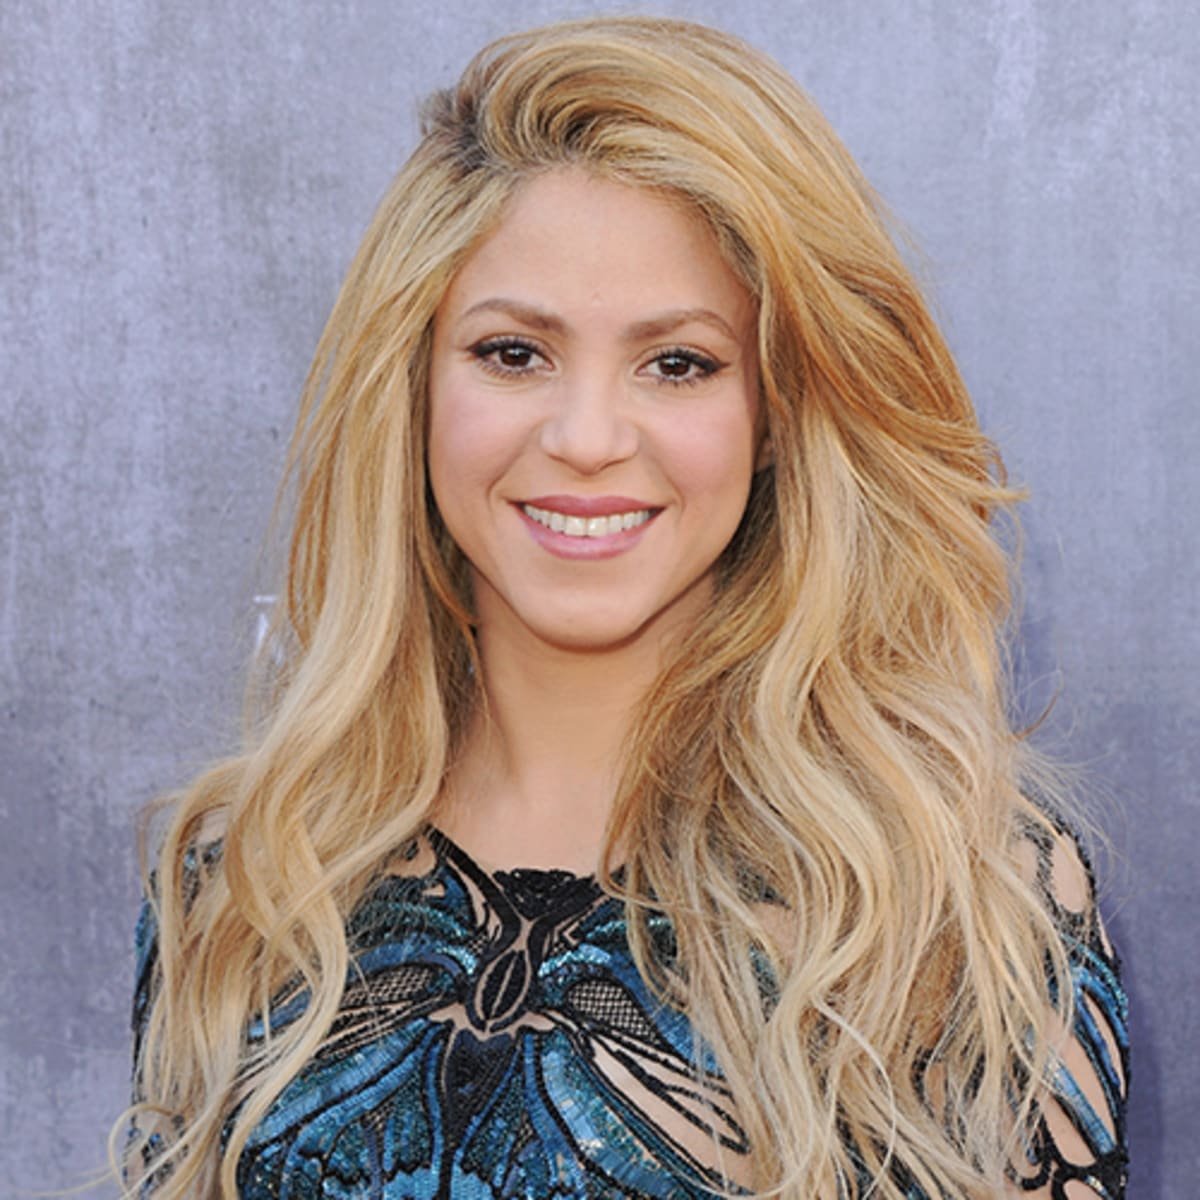 Shakira - Age, Super Bowl &amp; Songs - Biography